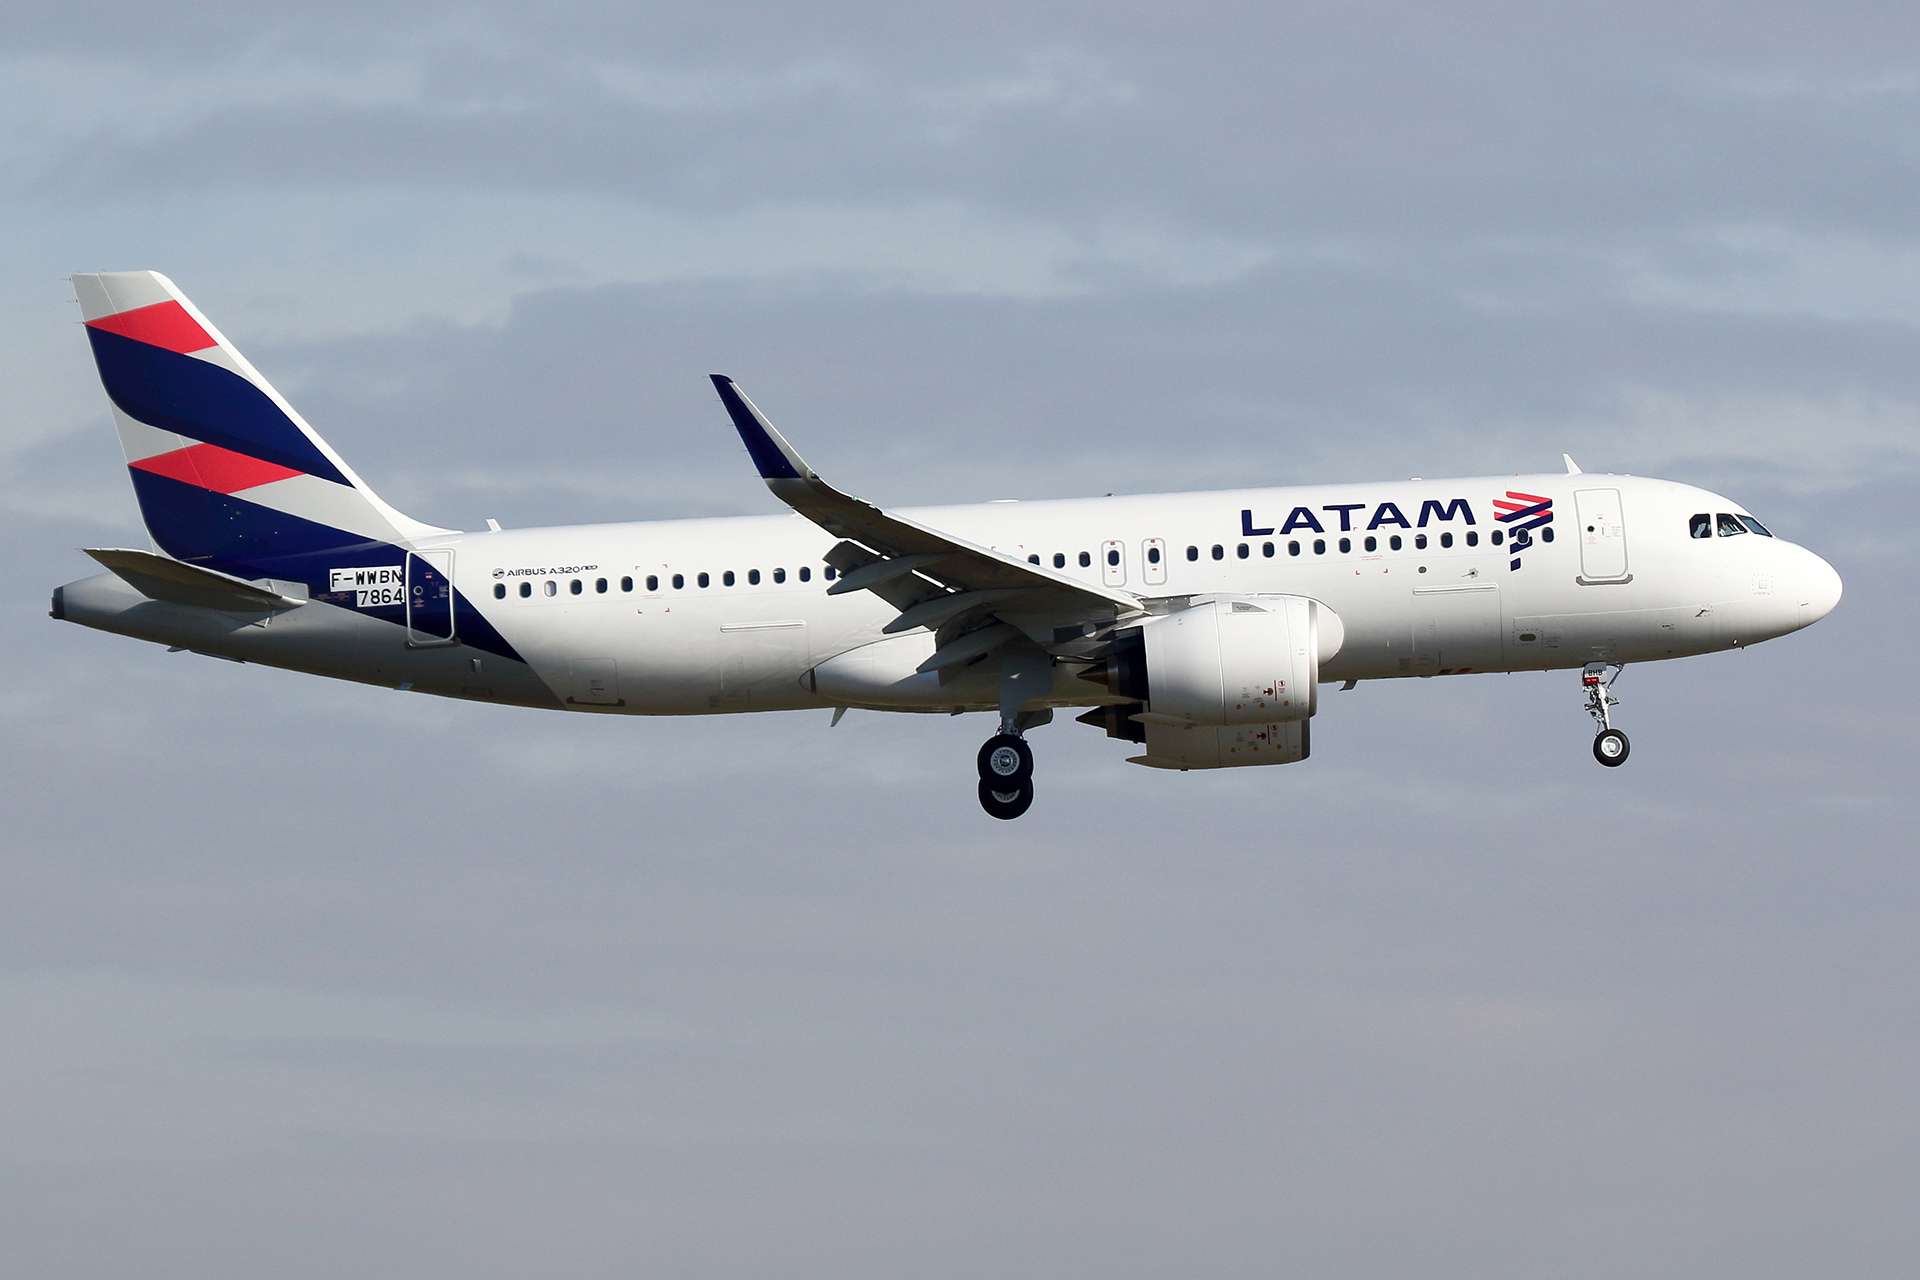 LATAM Group Handled Incredible 5.9m Passengers in June